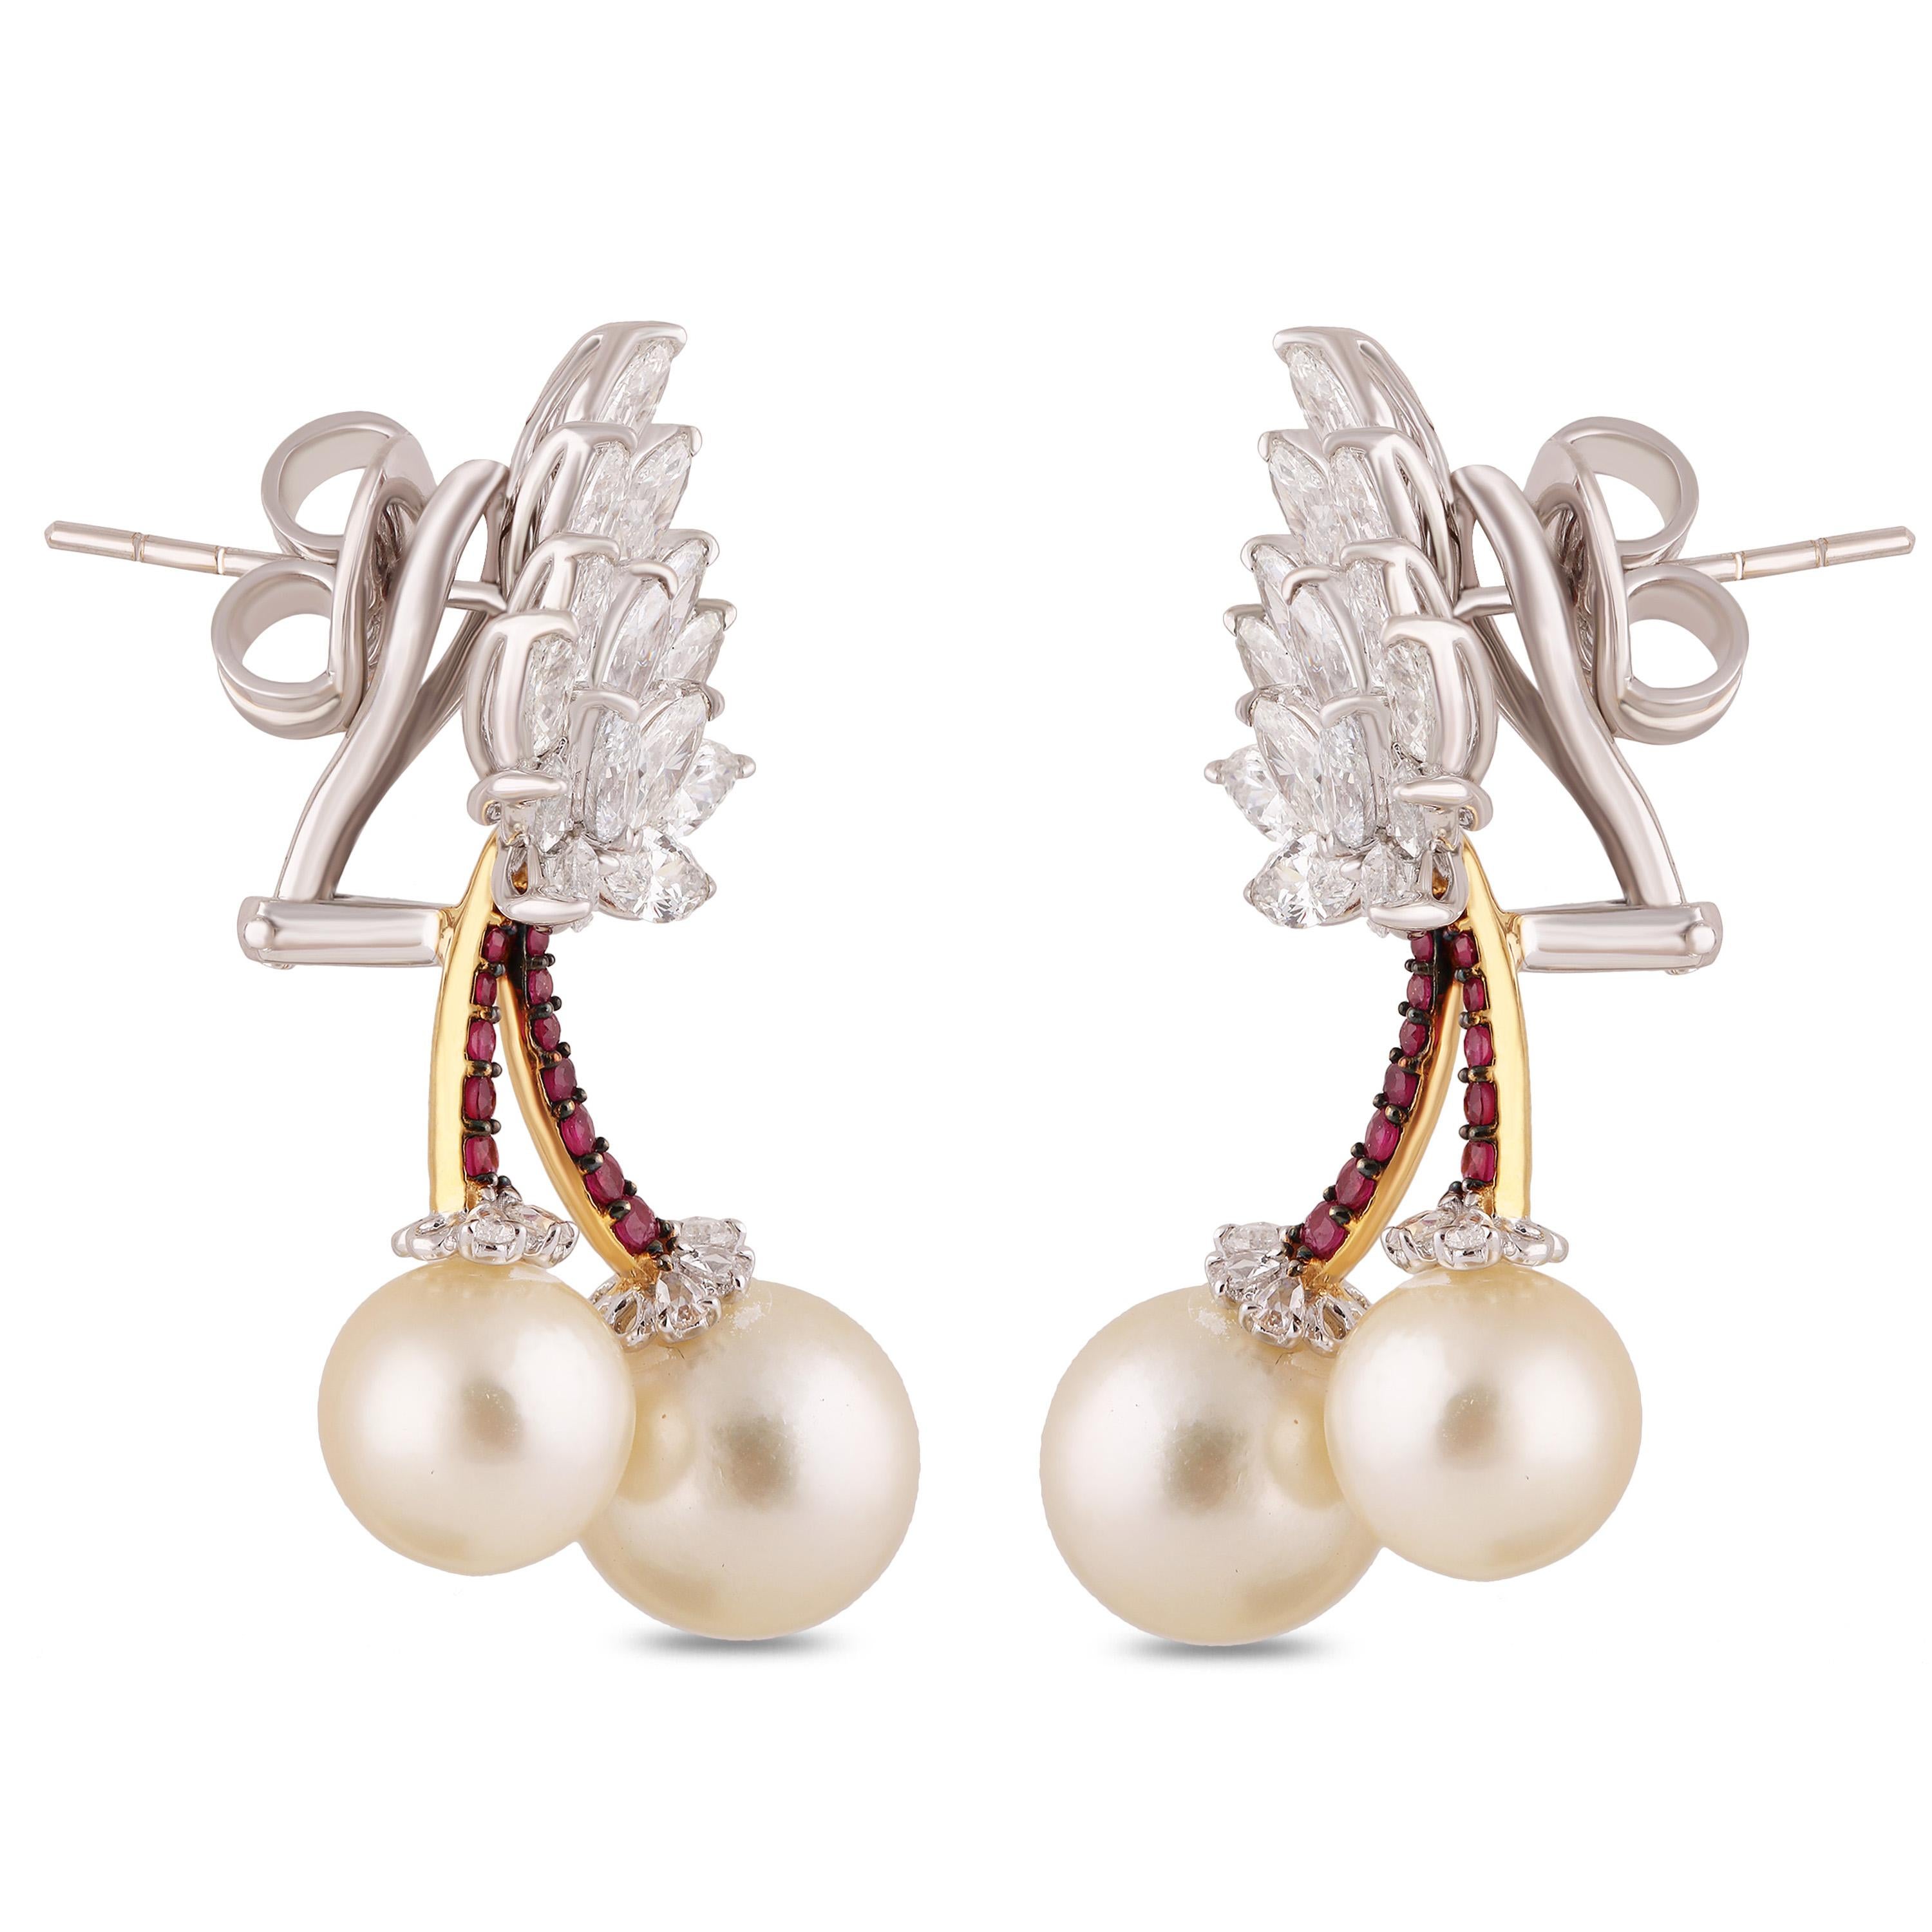 Marquise Cut Studio Rêves Cherry Blossom Diamond Stud Earrings in 18 Karat Gold For Sale